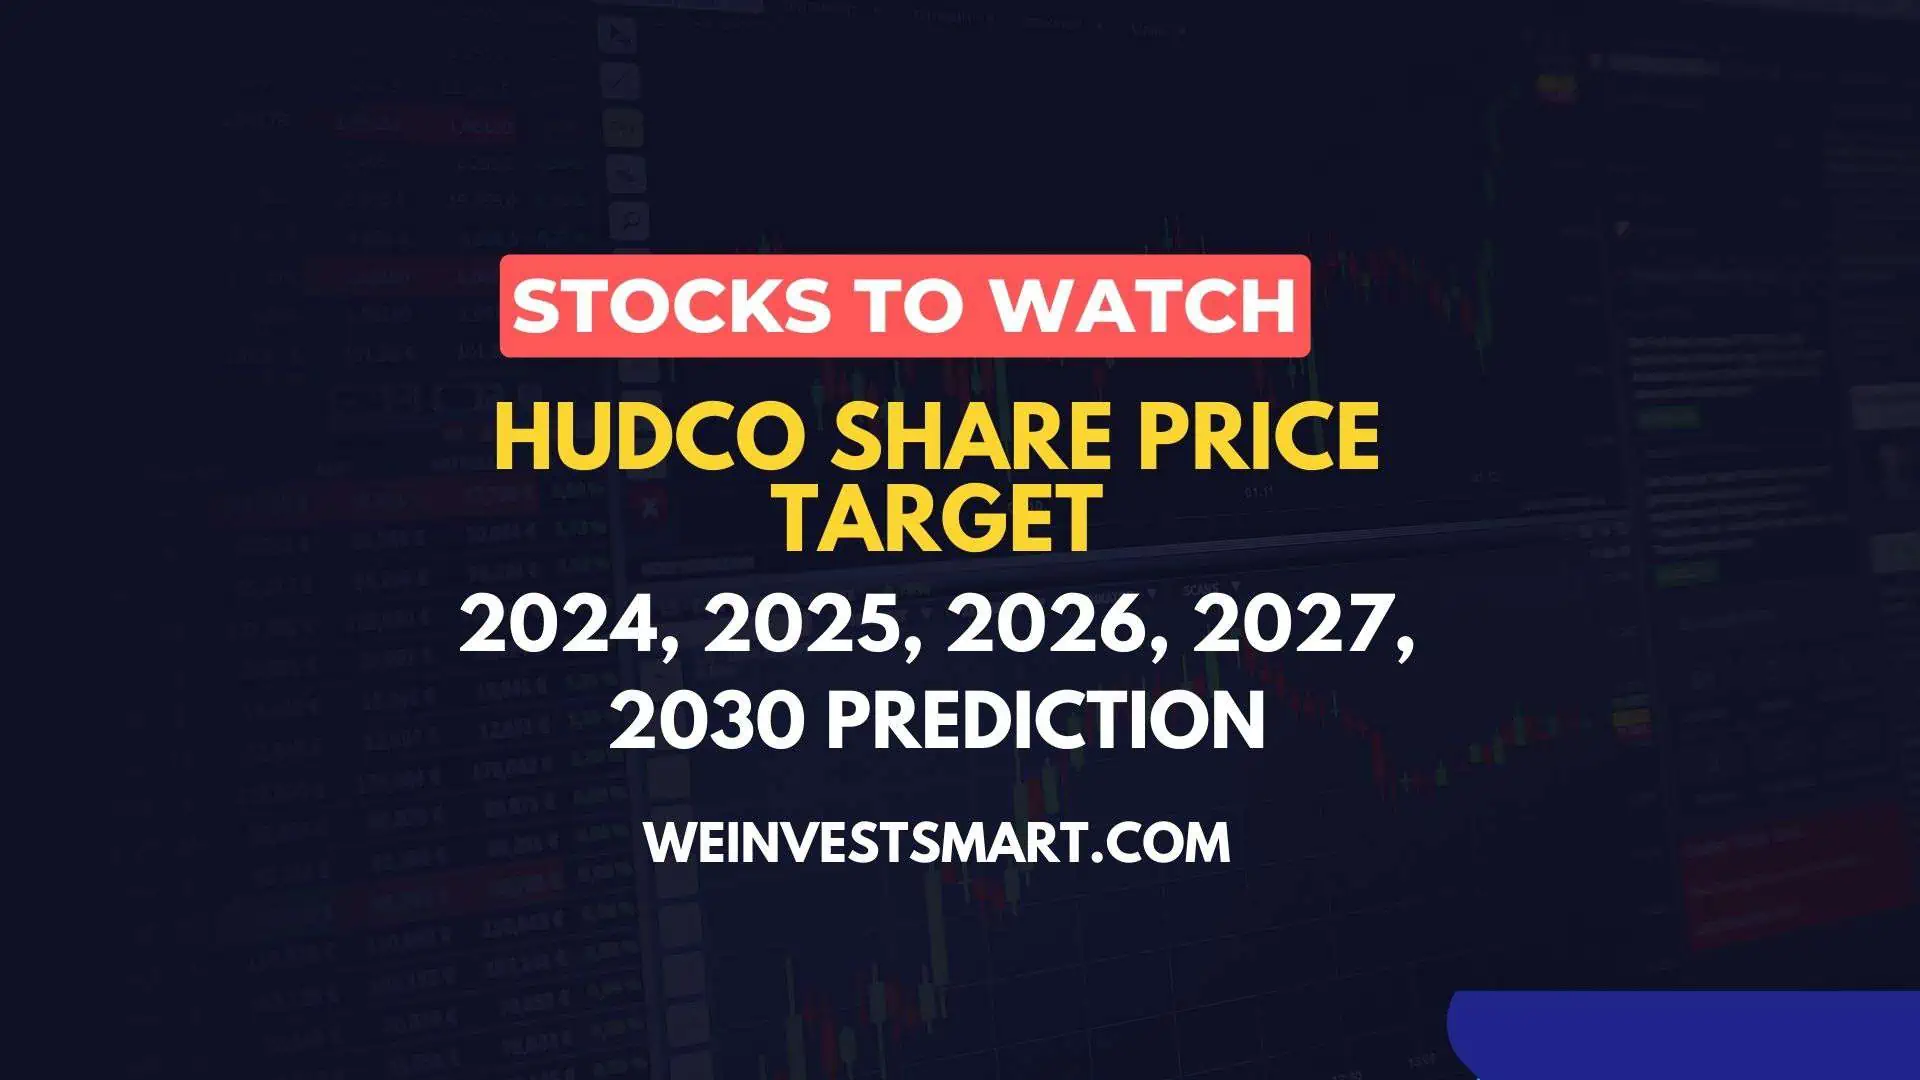 HUDCO share price target 2024, 2025, 2026, 2027, 2030 prediction